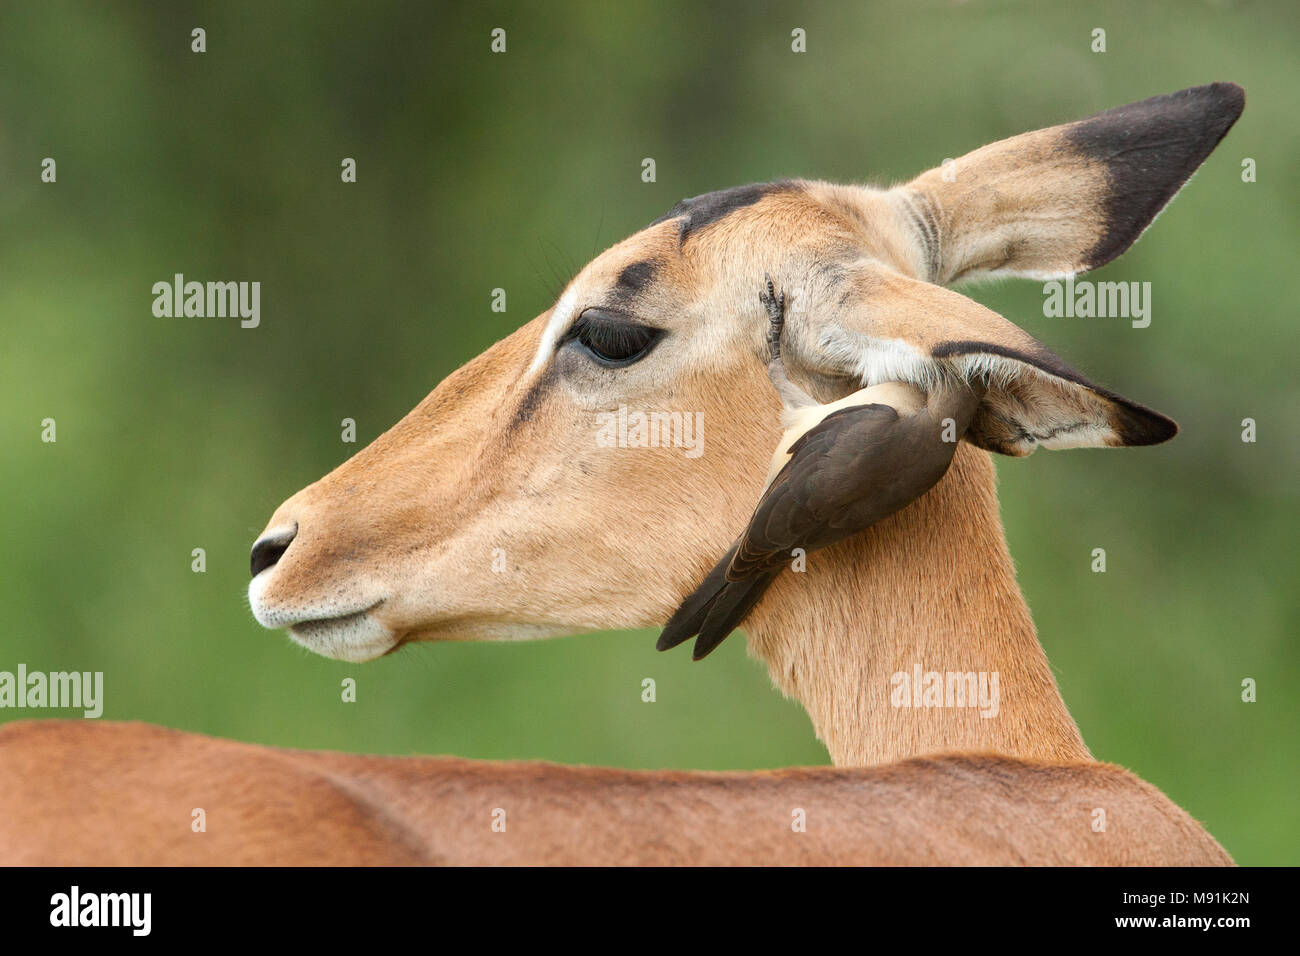 Roodsnavelossenpikker in het oor van impala, Red-billed Oxpecker in ear of impala Stock Photo